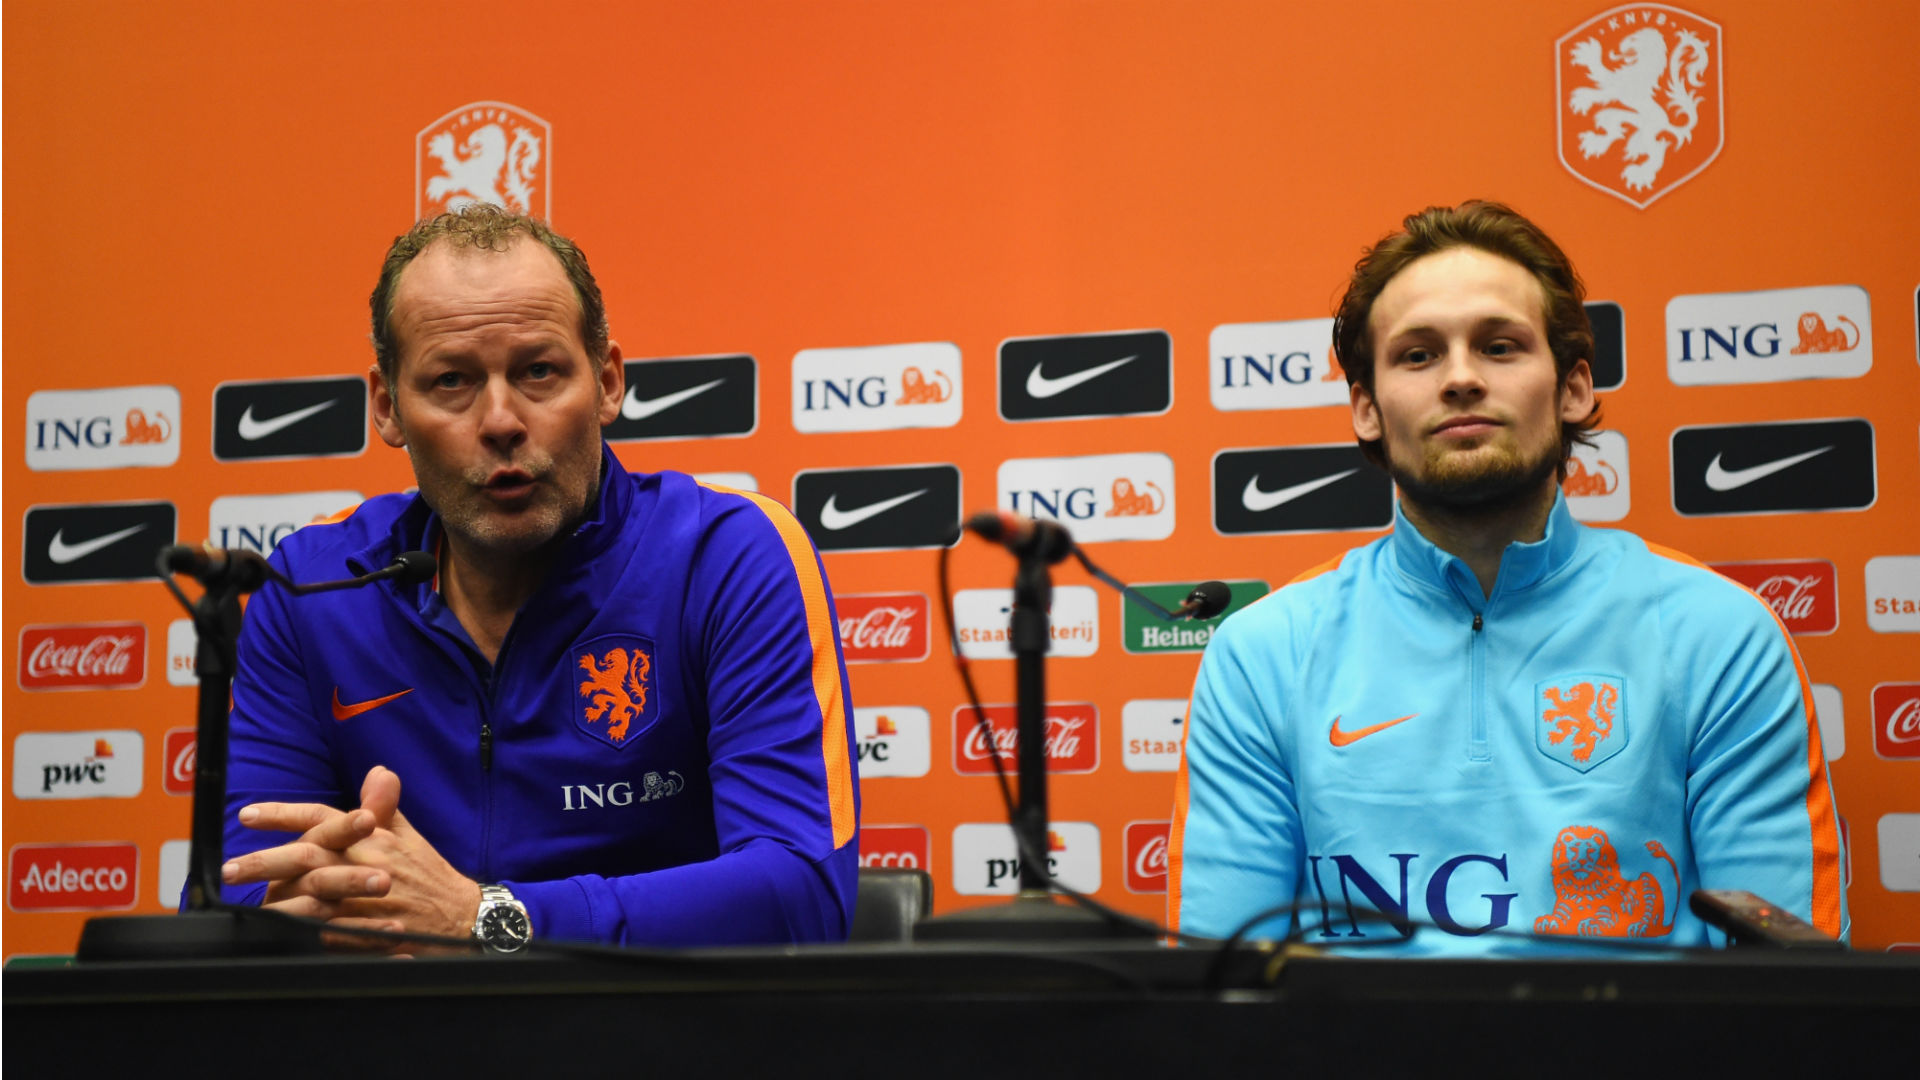 Danny Blind: Netherlands face uphill task after Iceland defeat